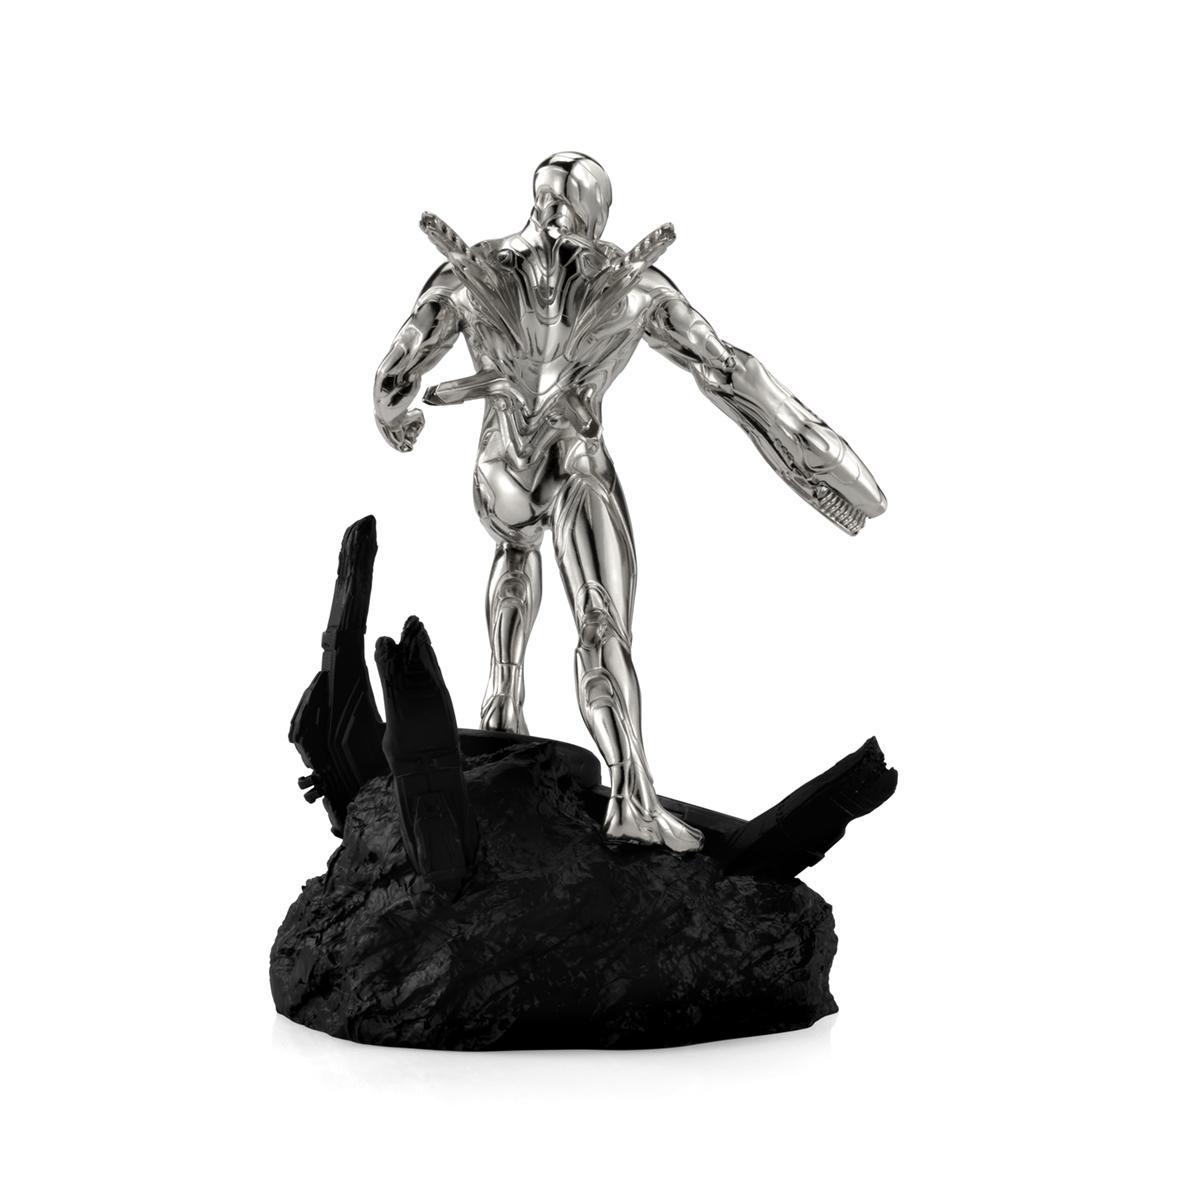 Limited Edition Iron Man Infinity War Figurine